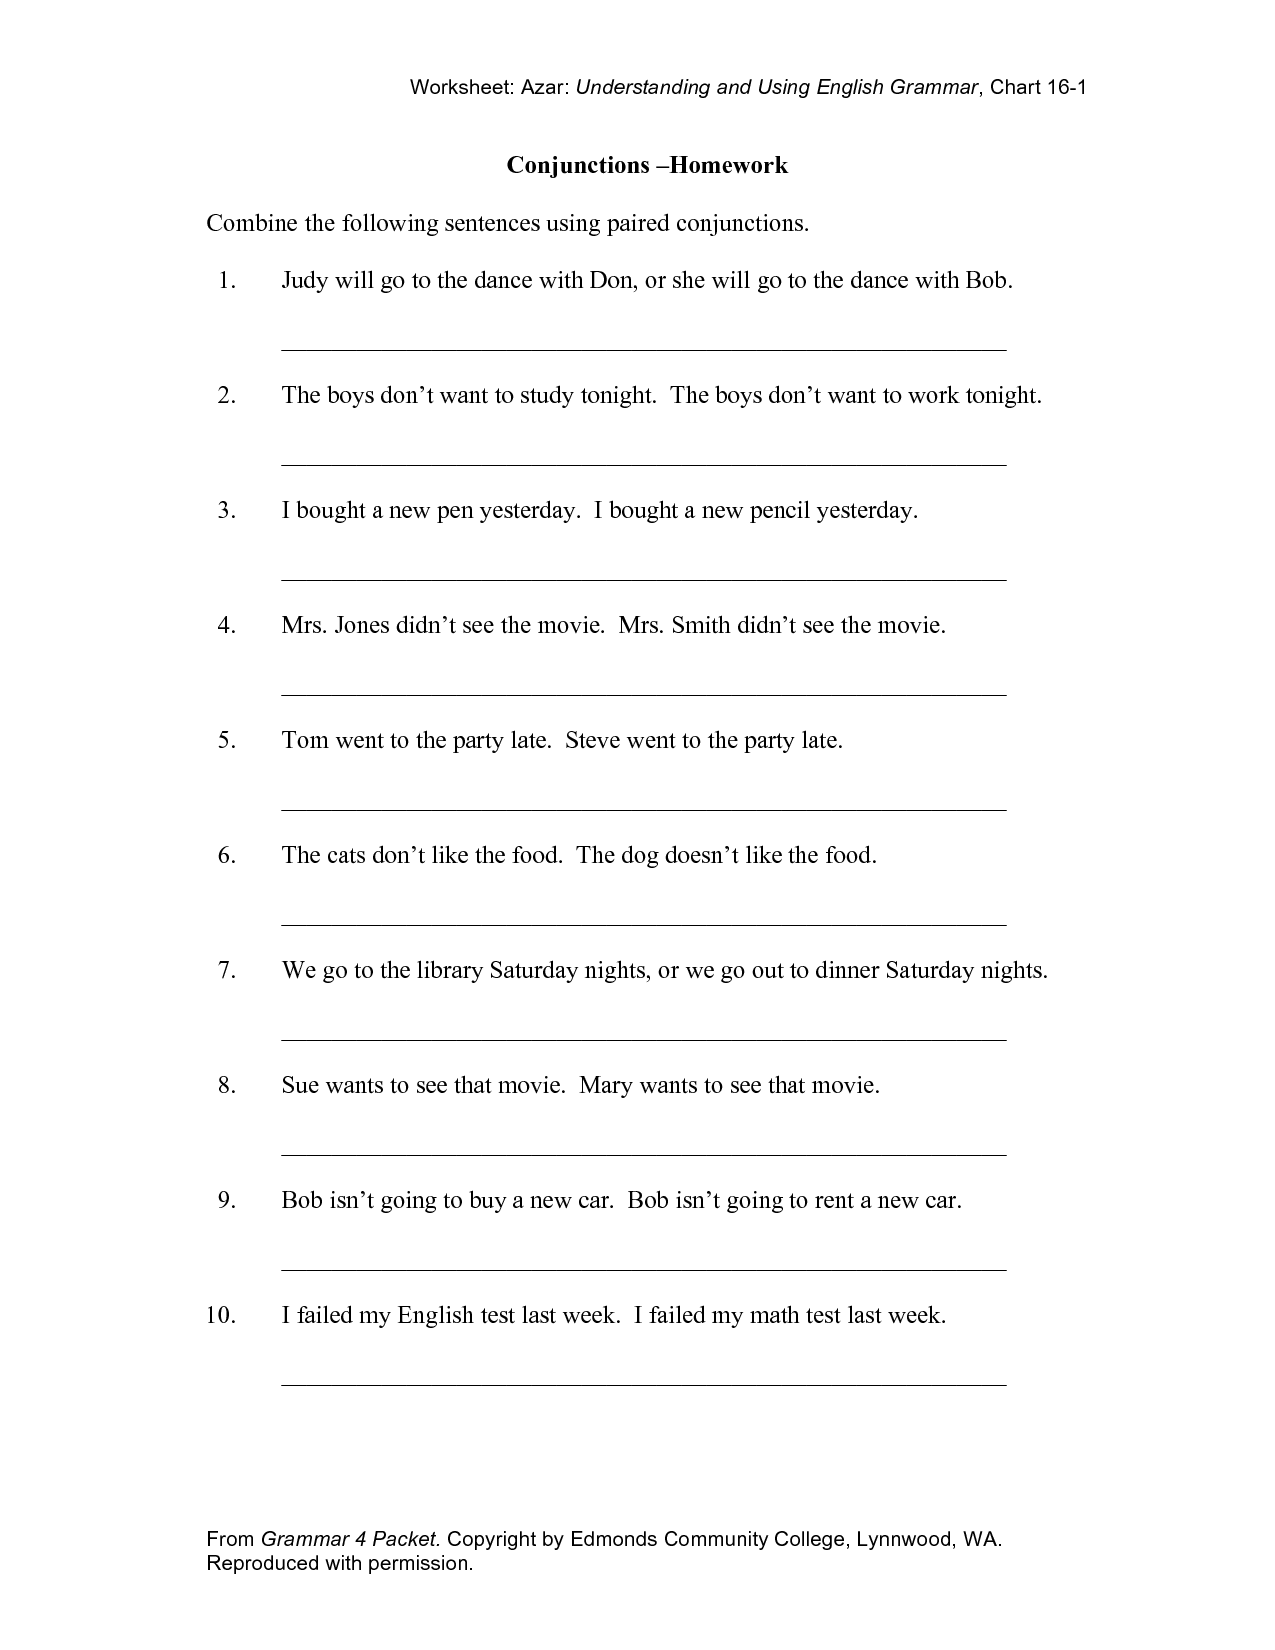 Combining Sentences Using Conjunctions Worksheet Image